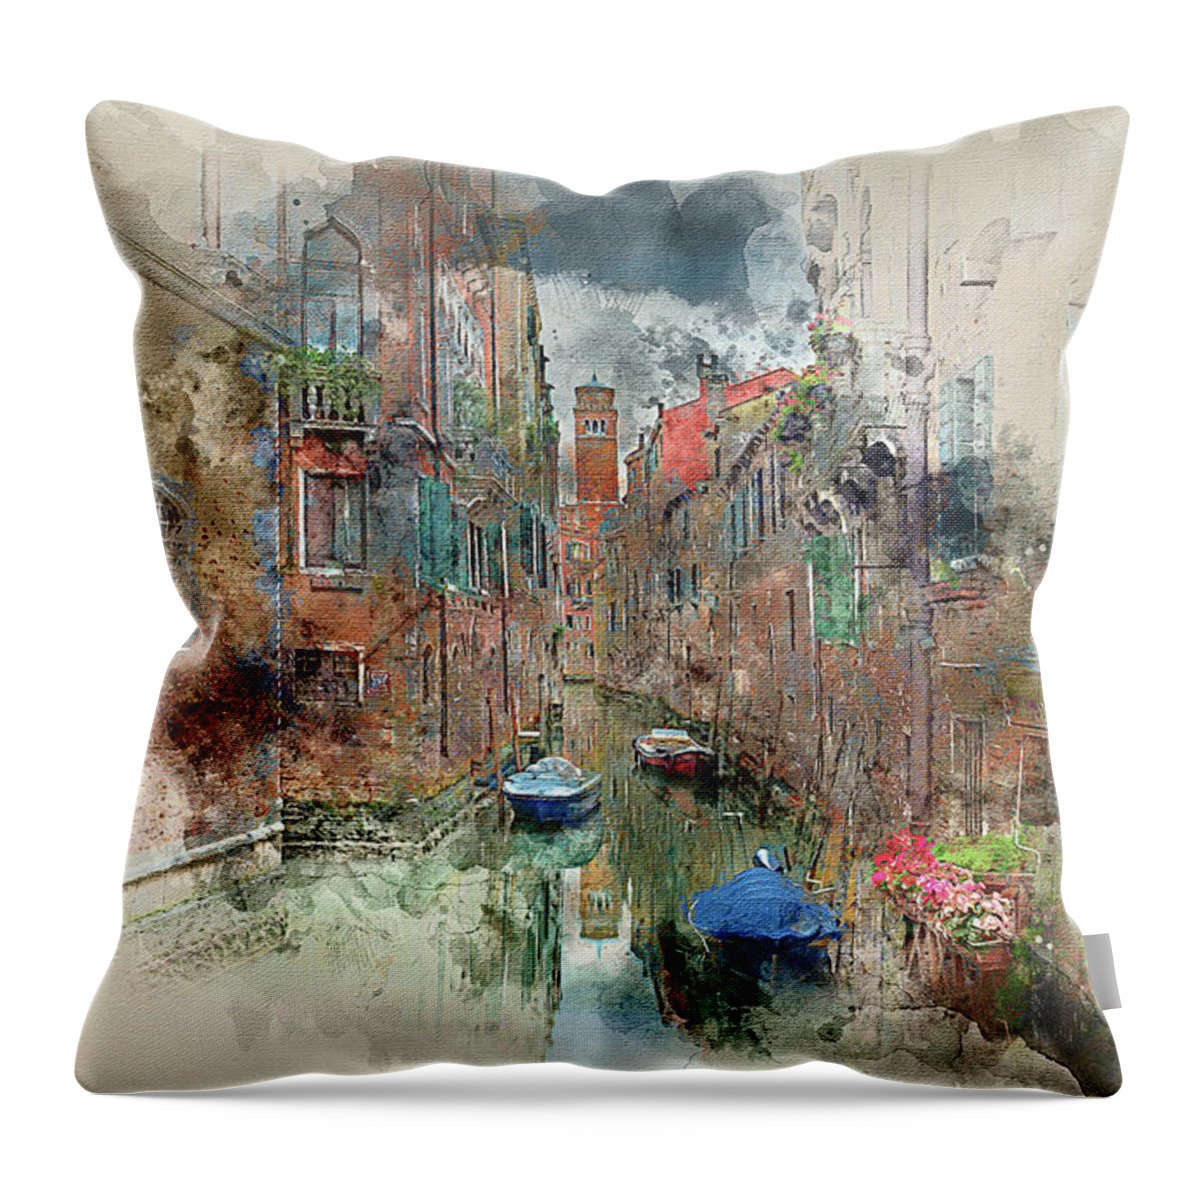 Venice Throw Pillow featuring the digital art Quiet Morning in Venice by Peter Kennett